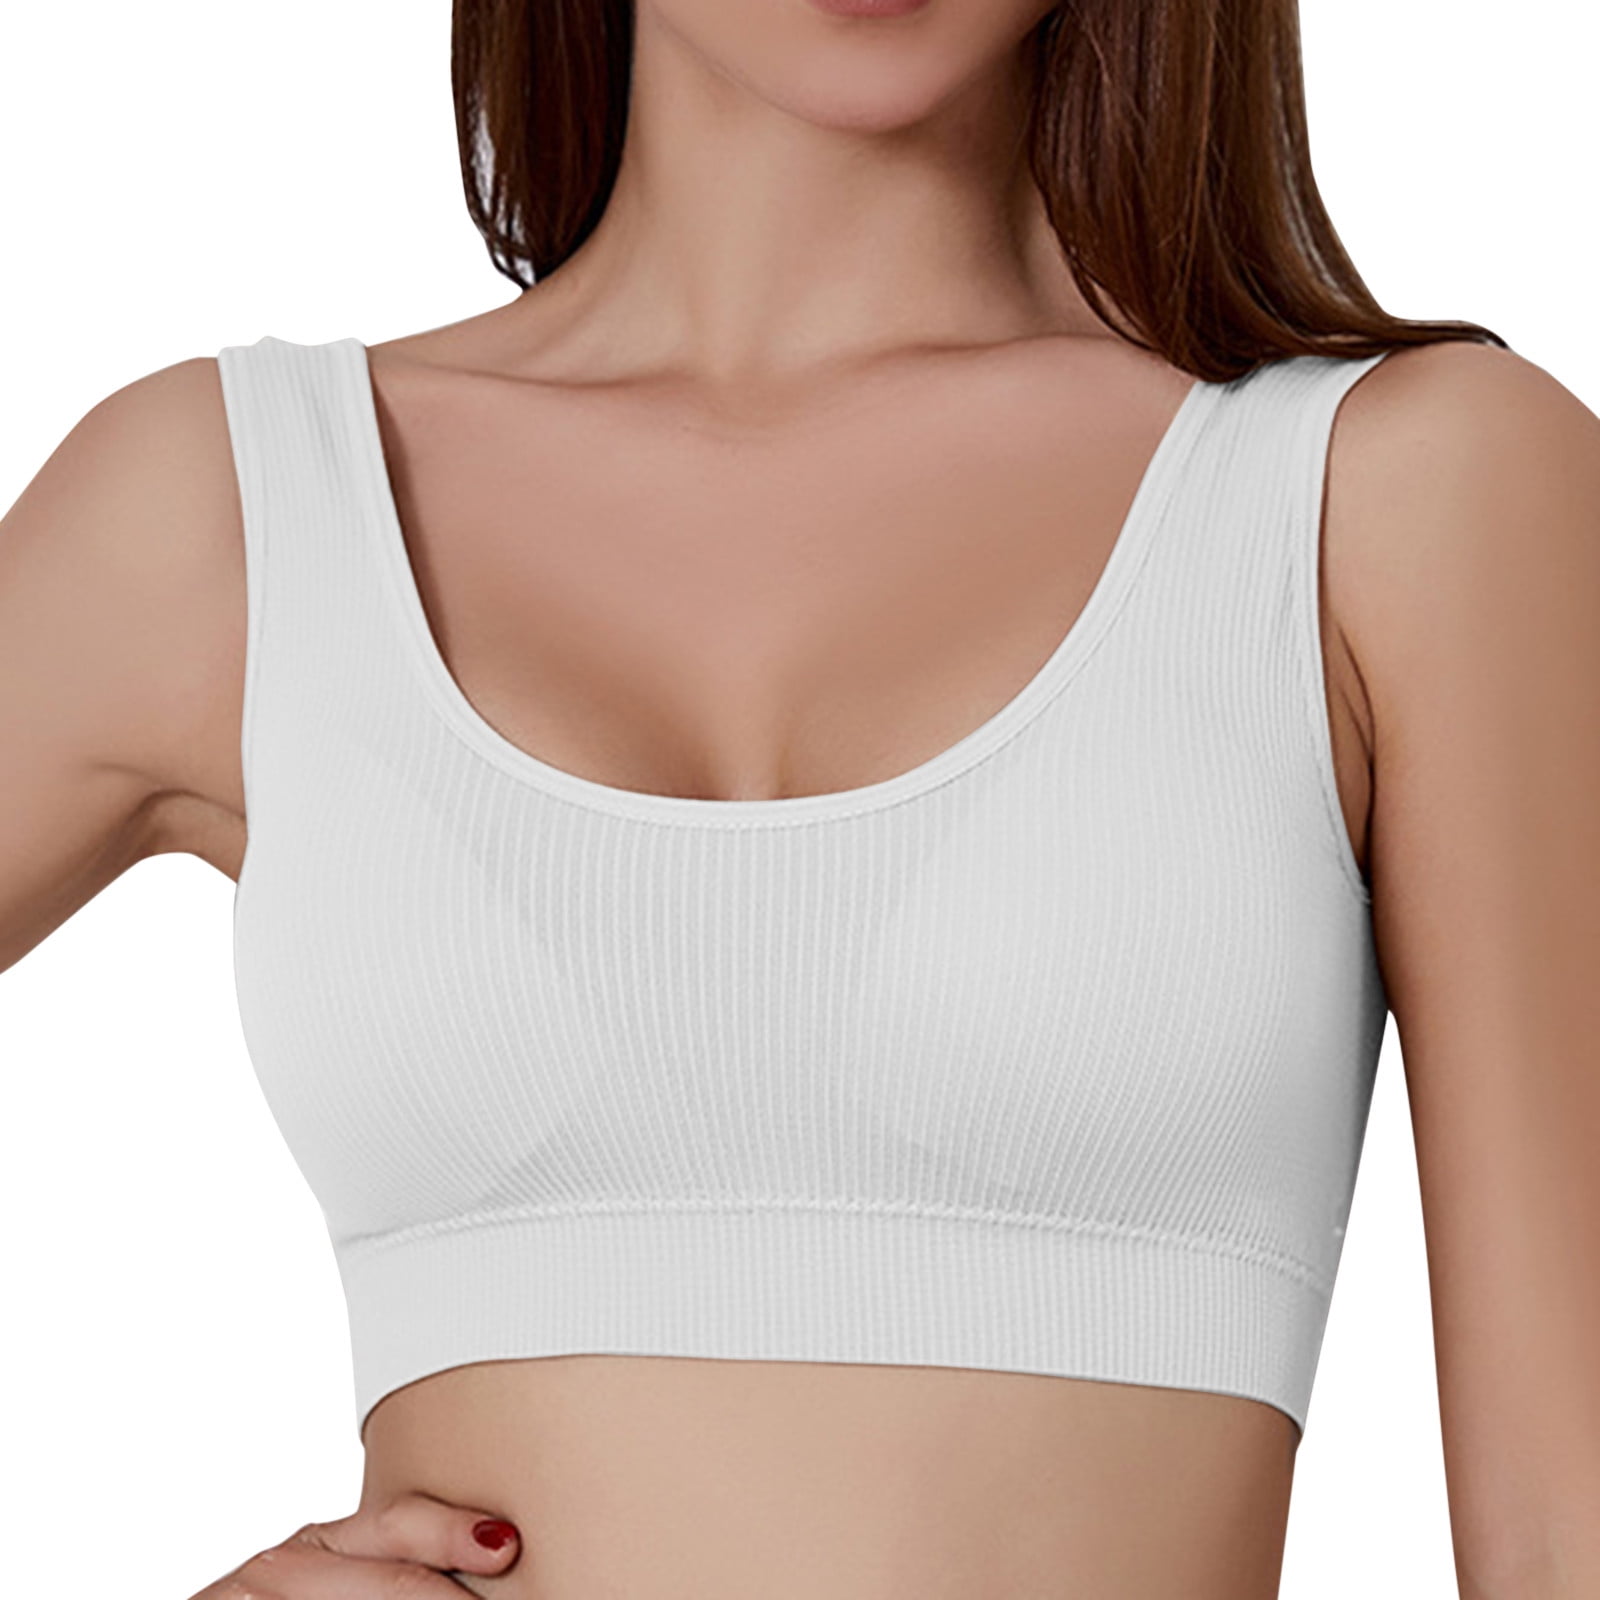 Eashery Minimizer Bras For Women Full Coverage Full-Freedom Front Closure  Bra, Wireless Cotton Sleep Bras for Women White XX-Large